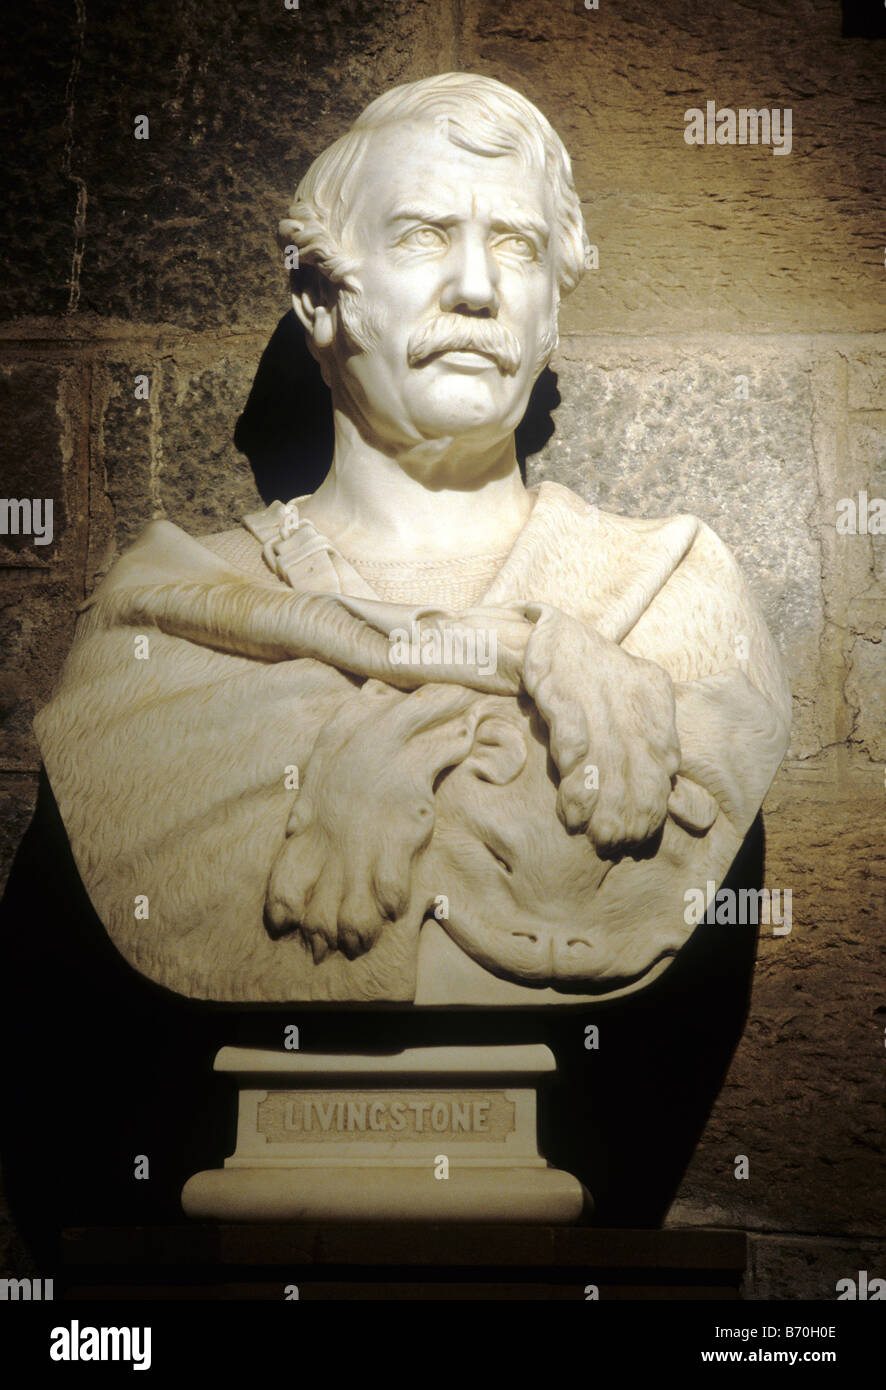 Stirling Scotland Wallace Monument Hall Of Fame Büste des Dr. Livingstone Scottish Explorer UK Marmor Bildnis Porträt Stockfoto